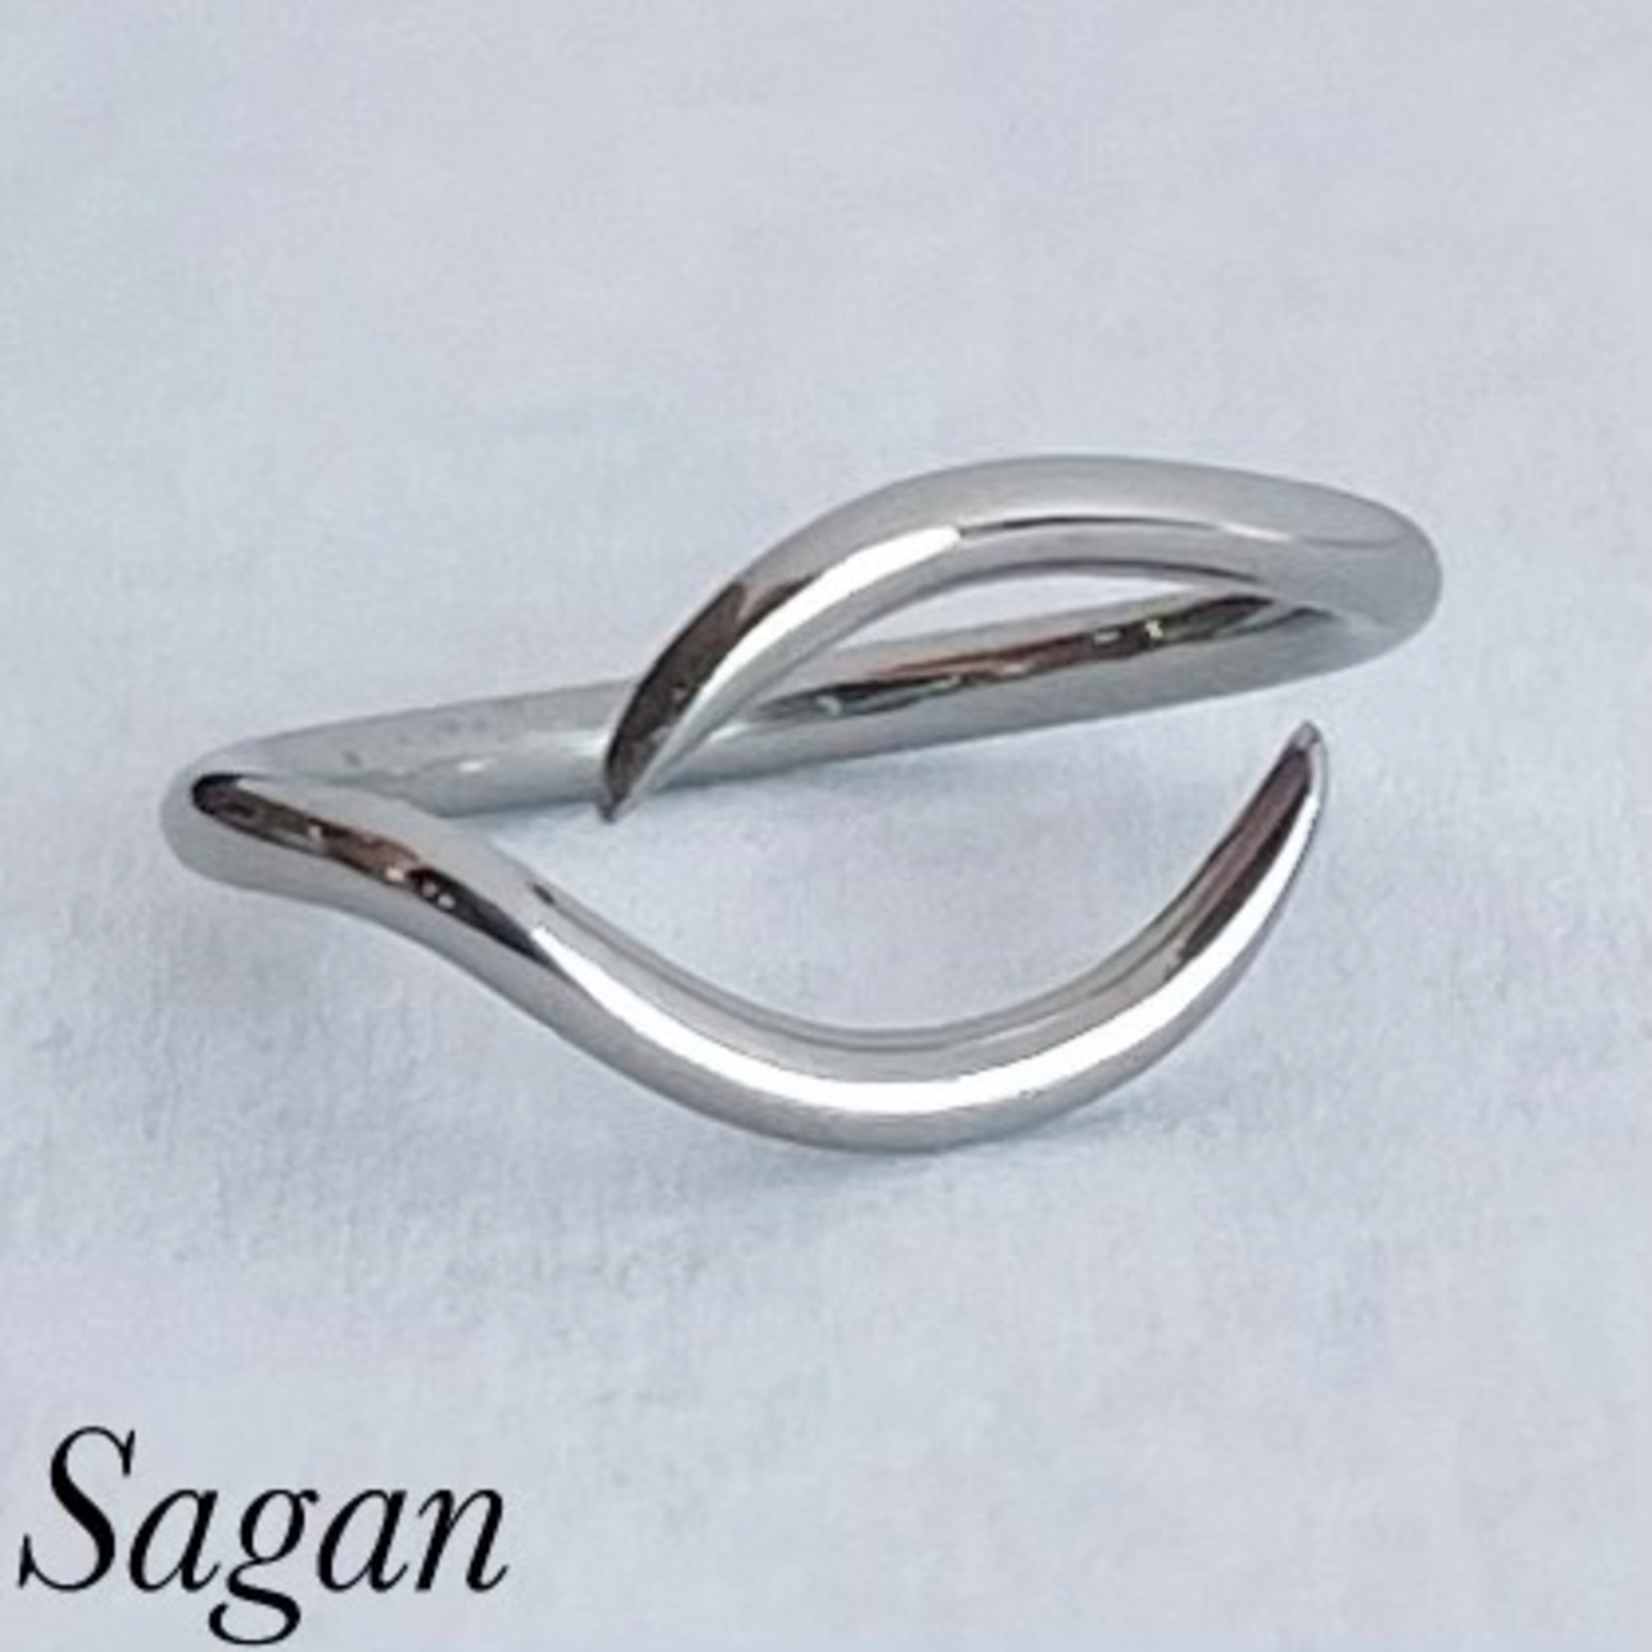 Interstellar Jewelry Productions Interstellar Jewelry Productions niobium "Sagan" conch seam ring